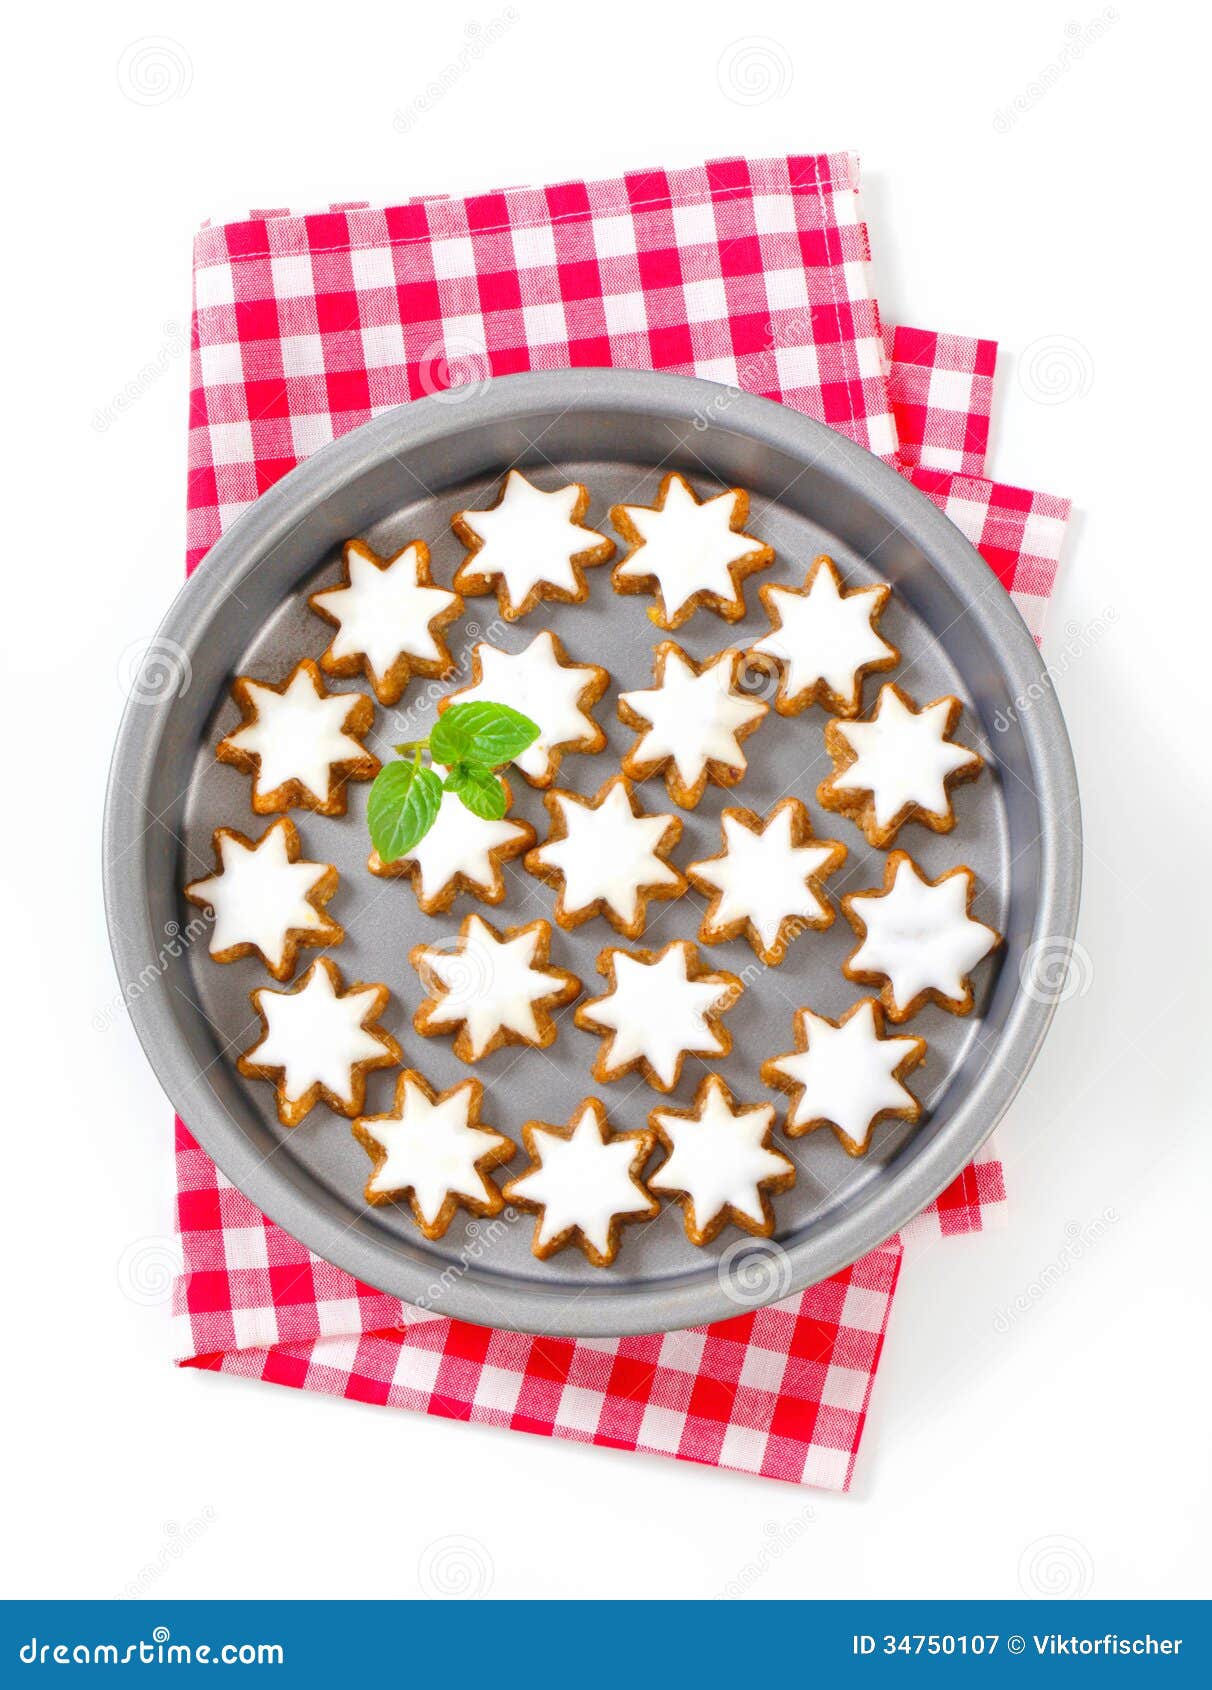 Cinnamon star cookies stock image. Image of treat, icing - 34750107